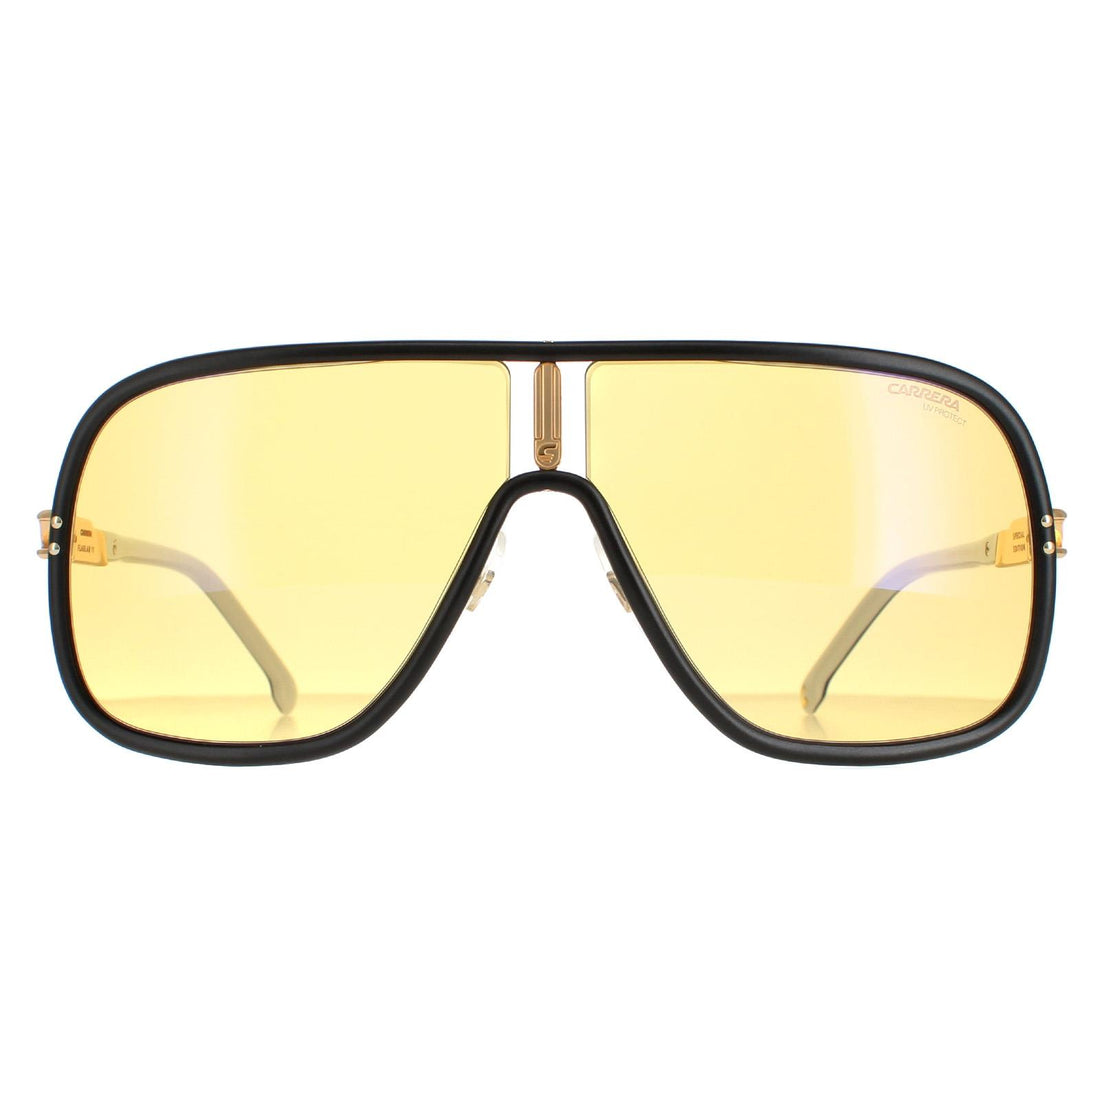 Carrera Flaglab 11 Sunglasses Matte Black Yellow / Yellow